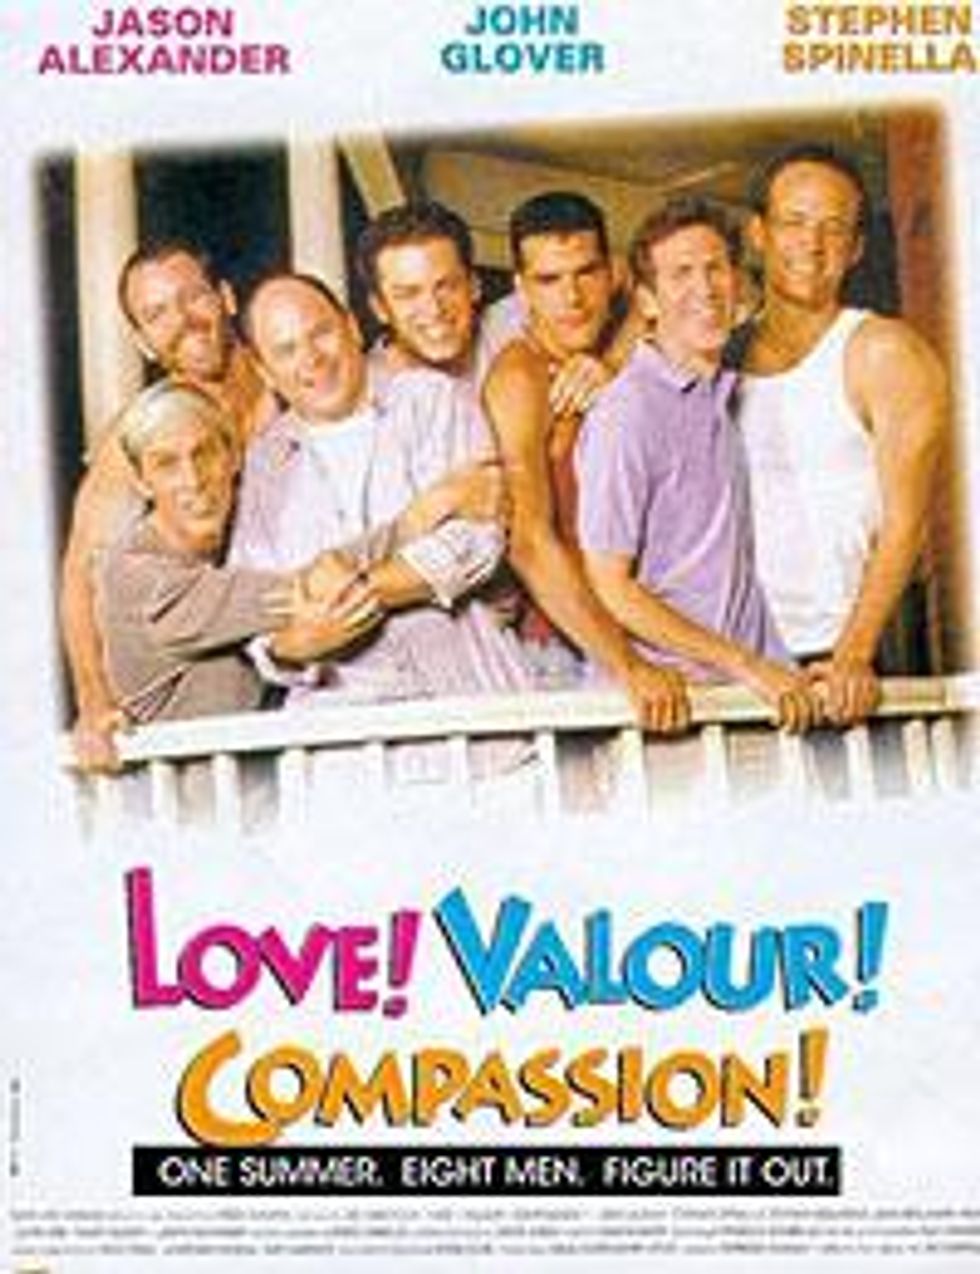 Love-valour-compassionx200_0